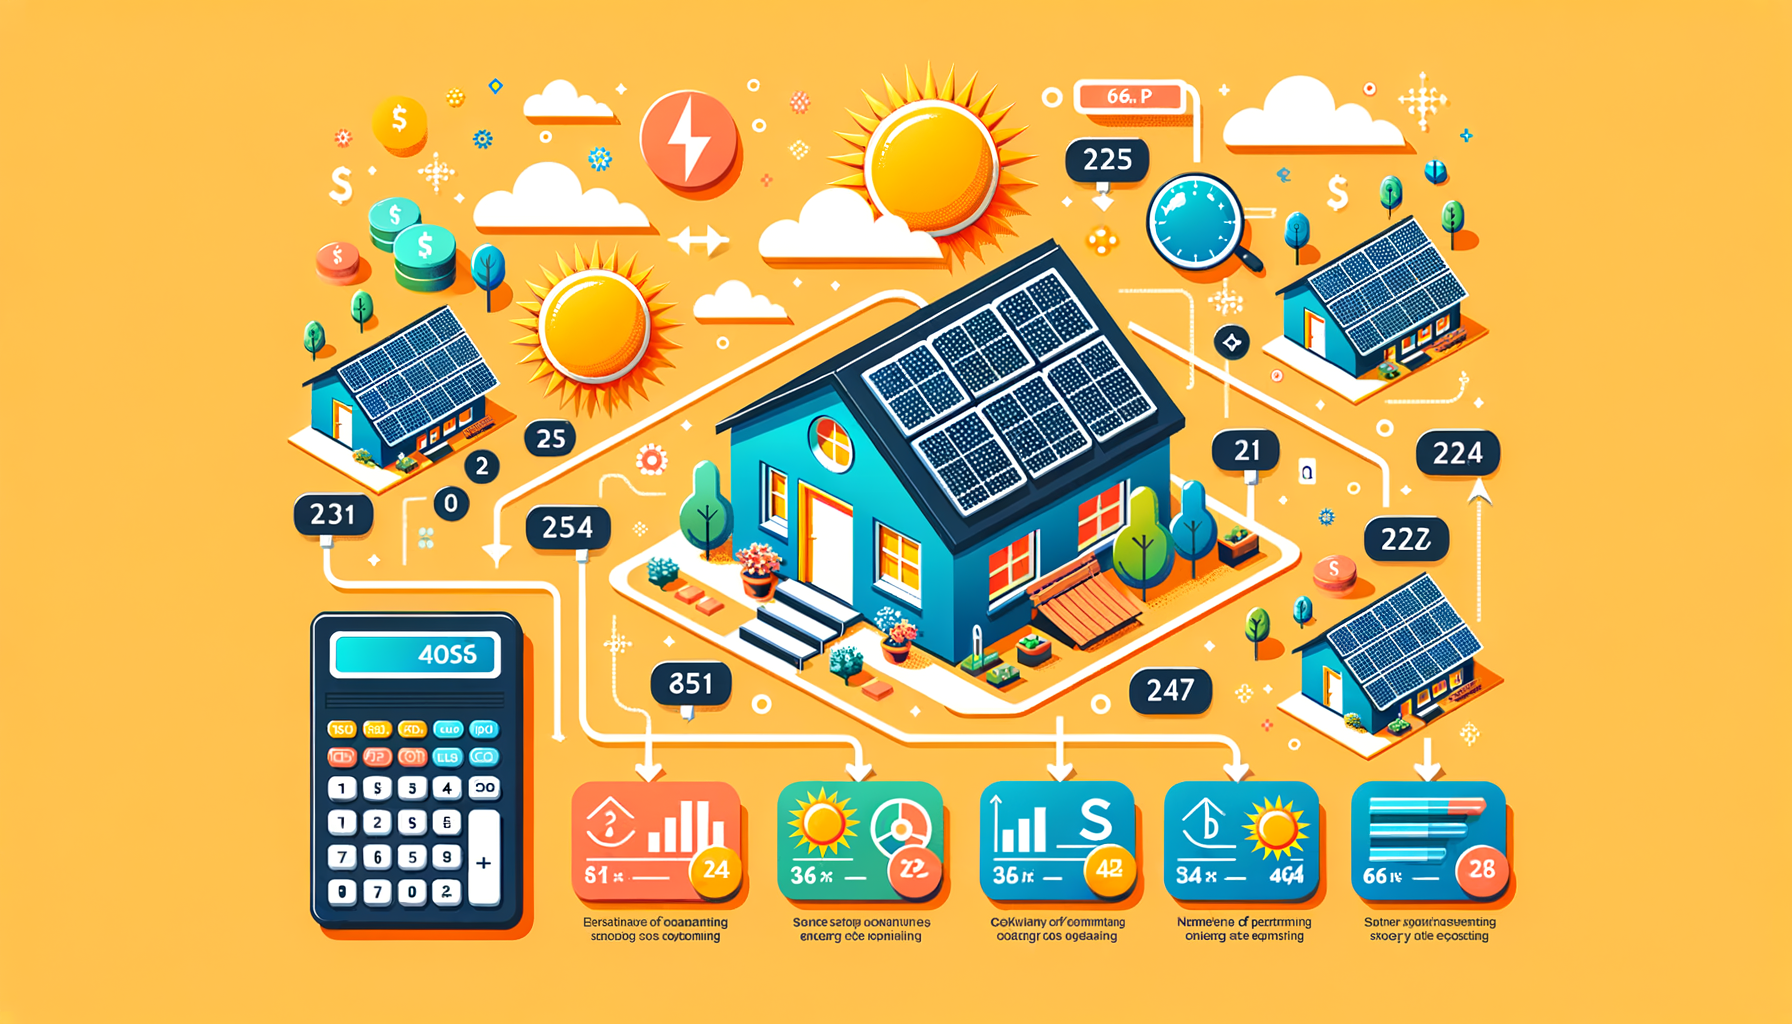 ALT: Infographic explaining solar panel calculations for a tiny home